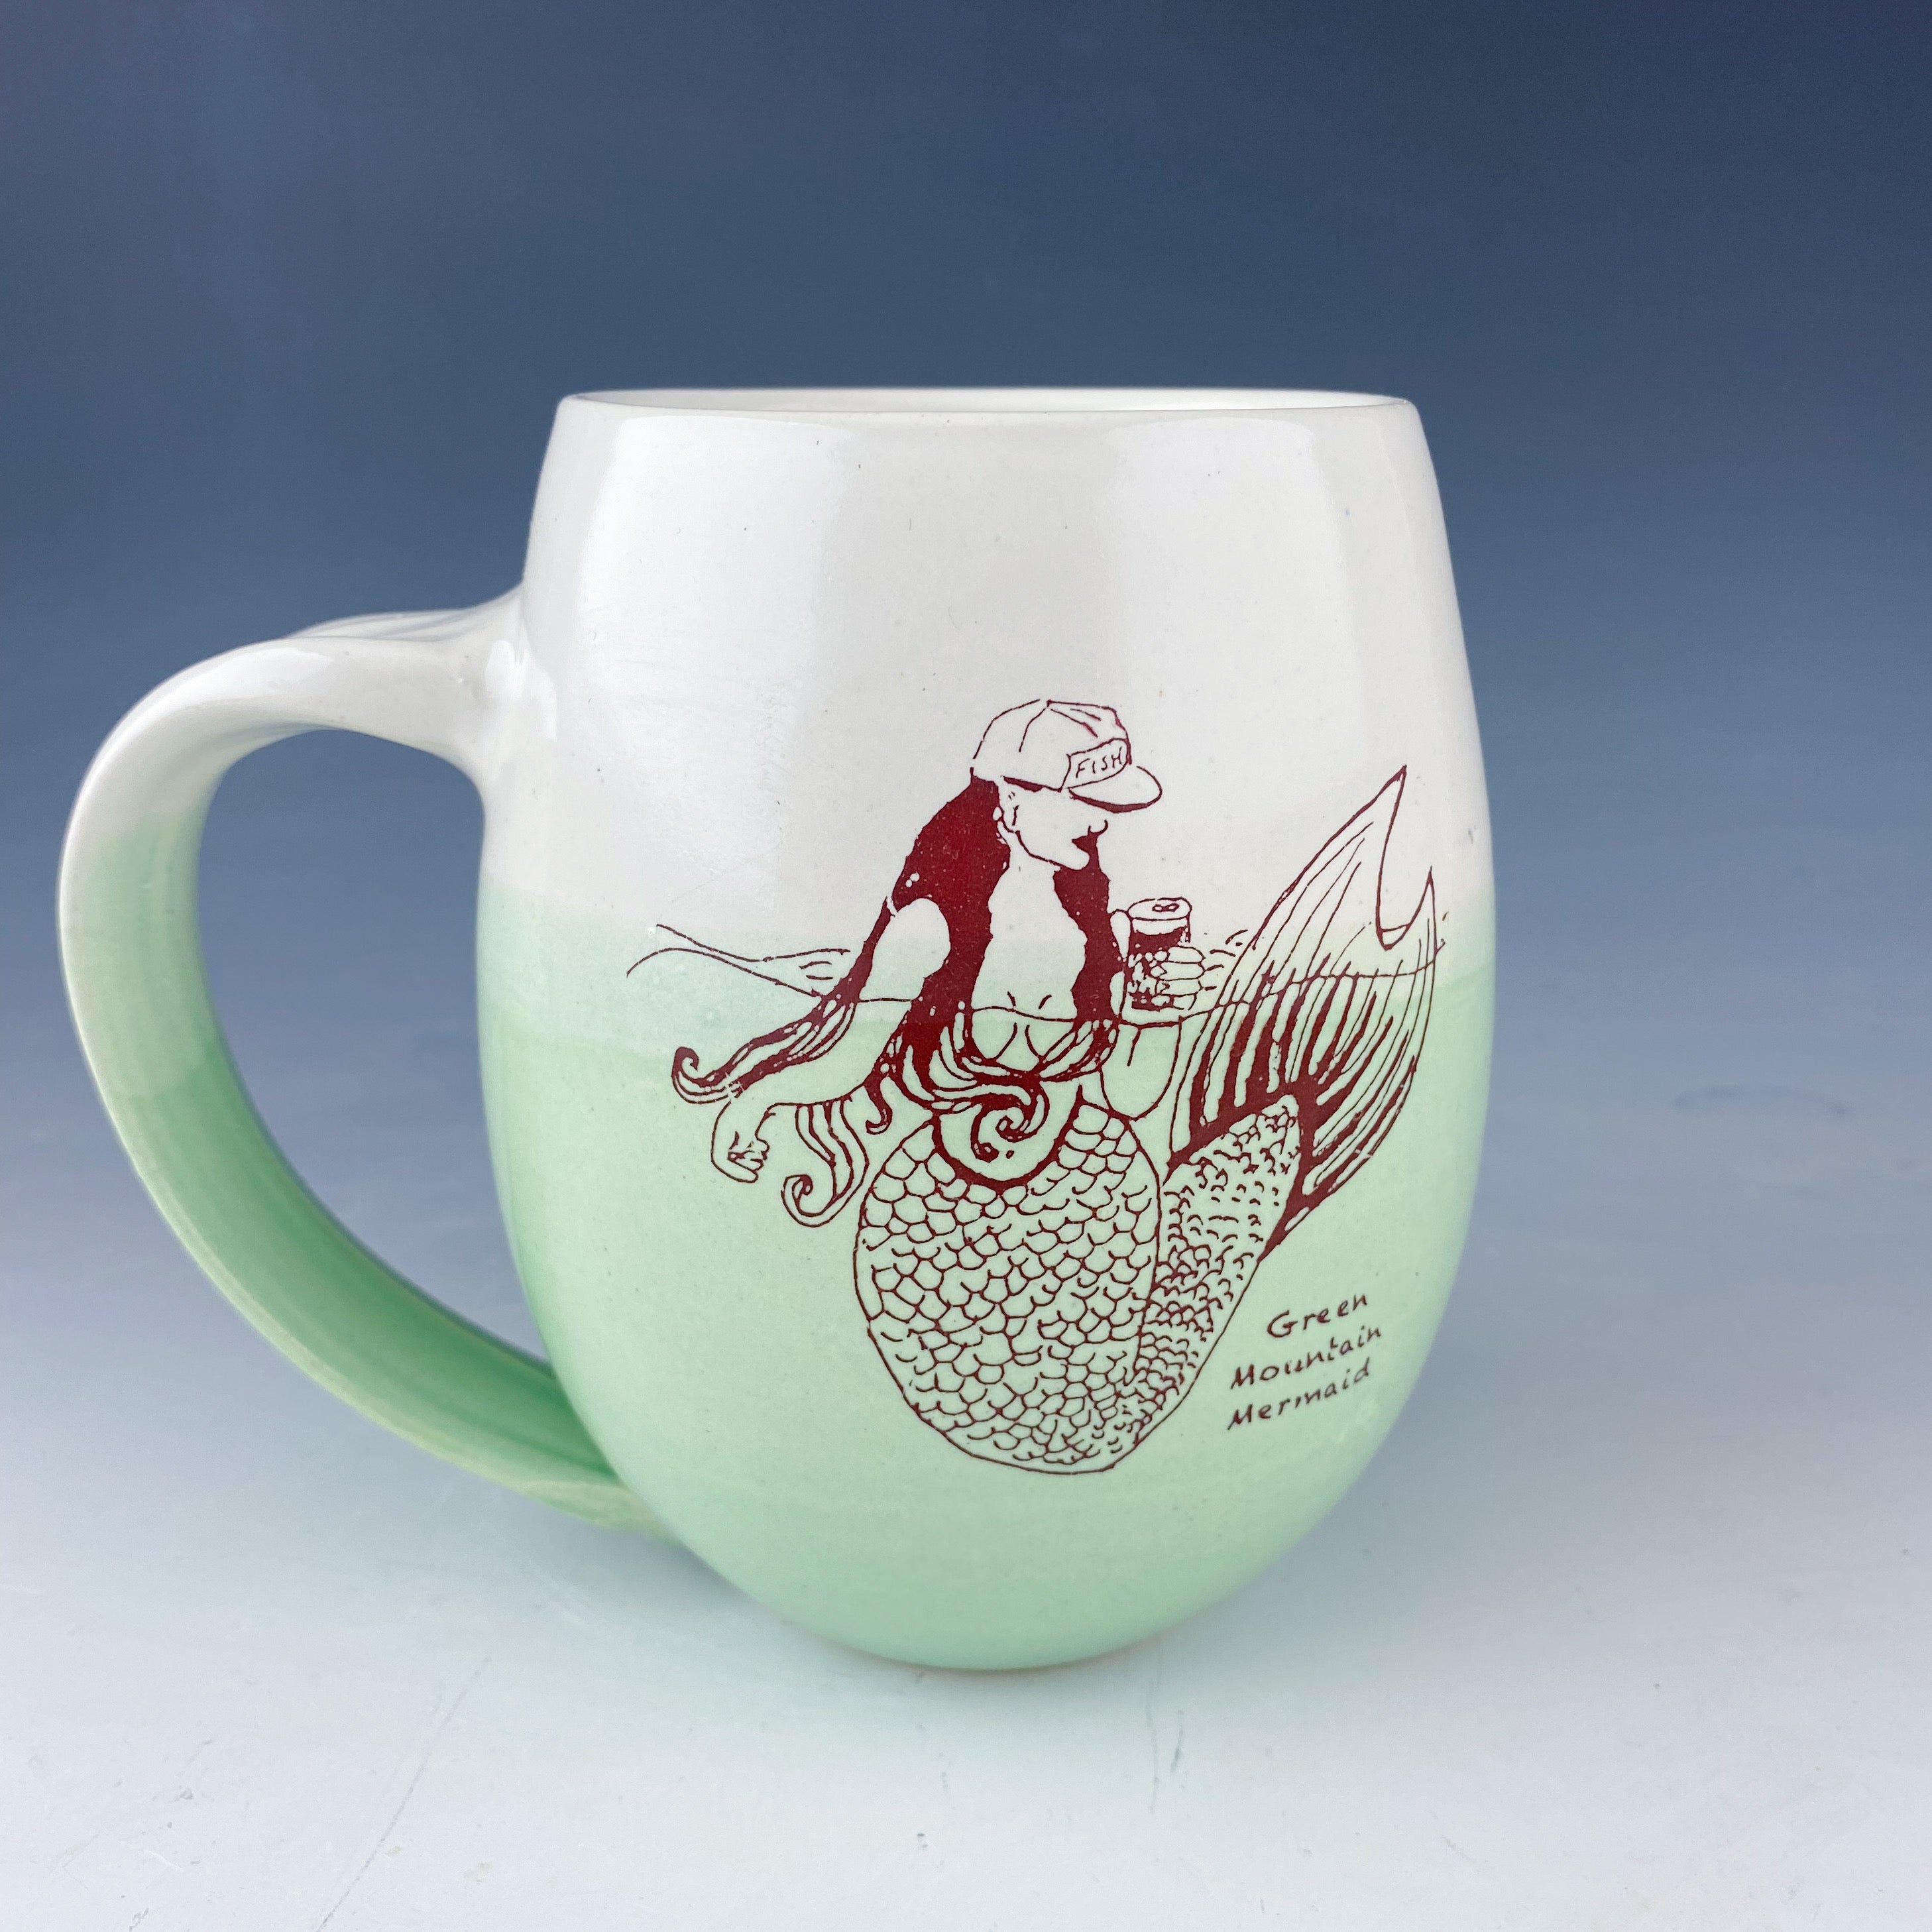 Green Mountain Mermaid Mug